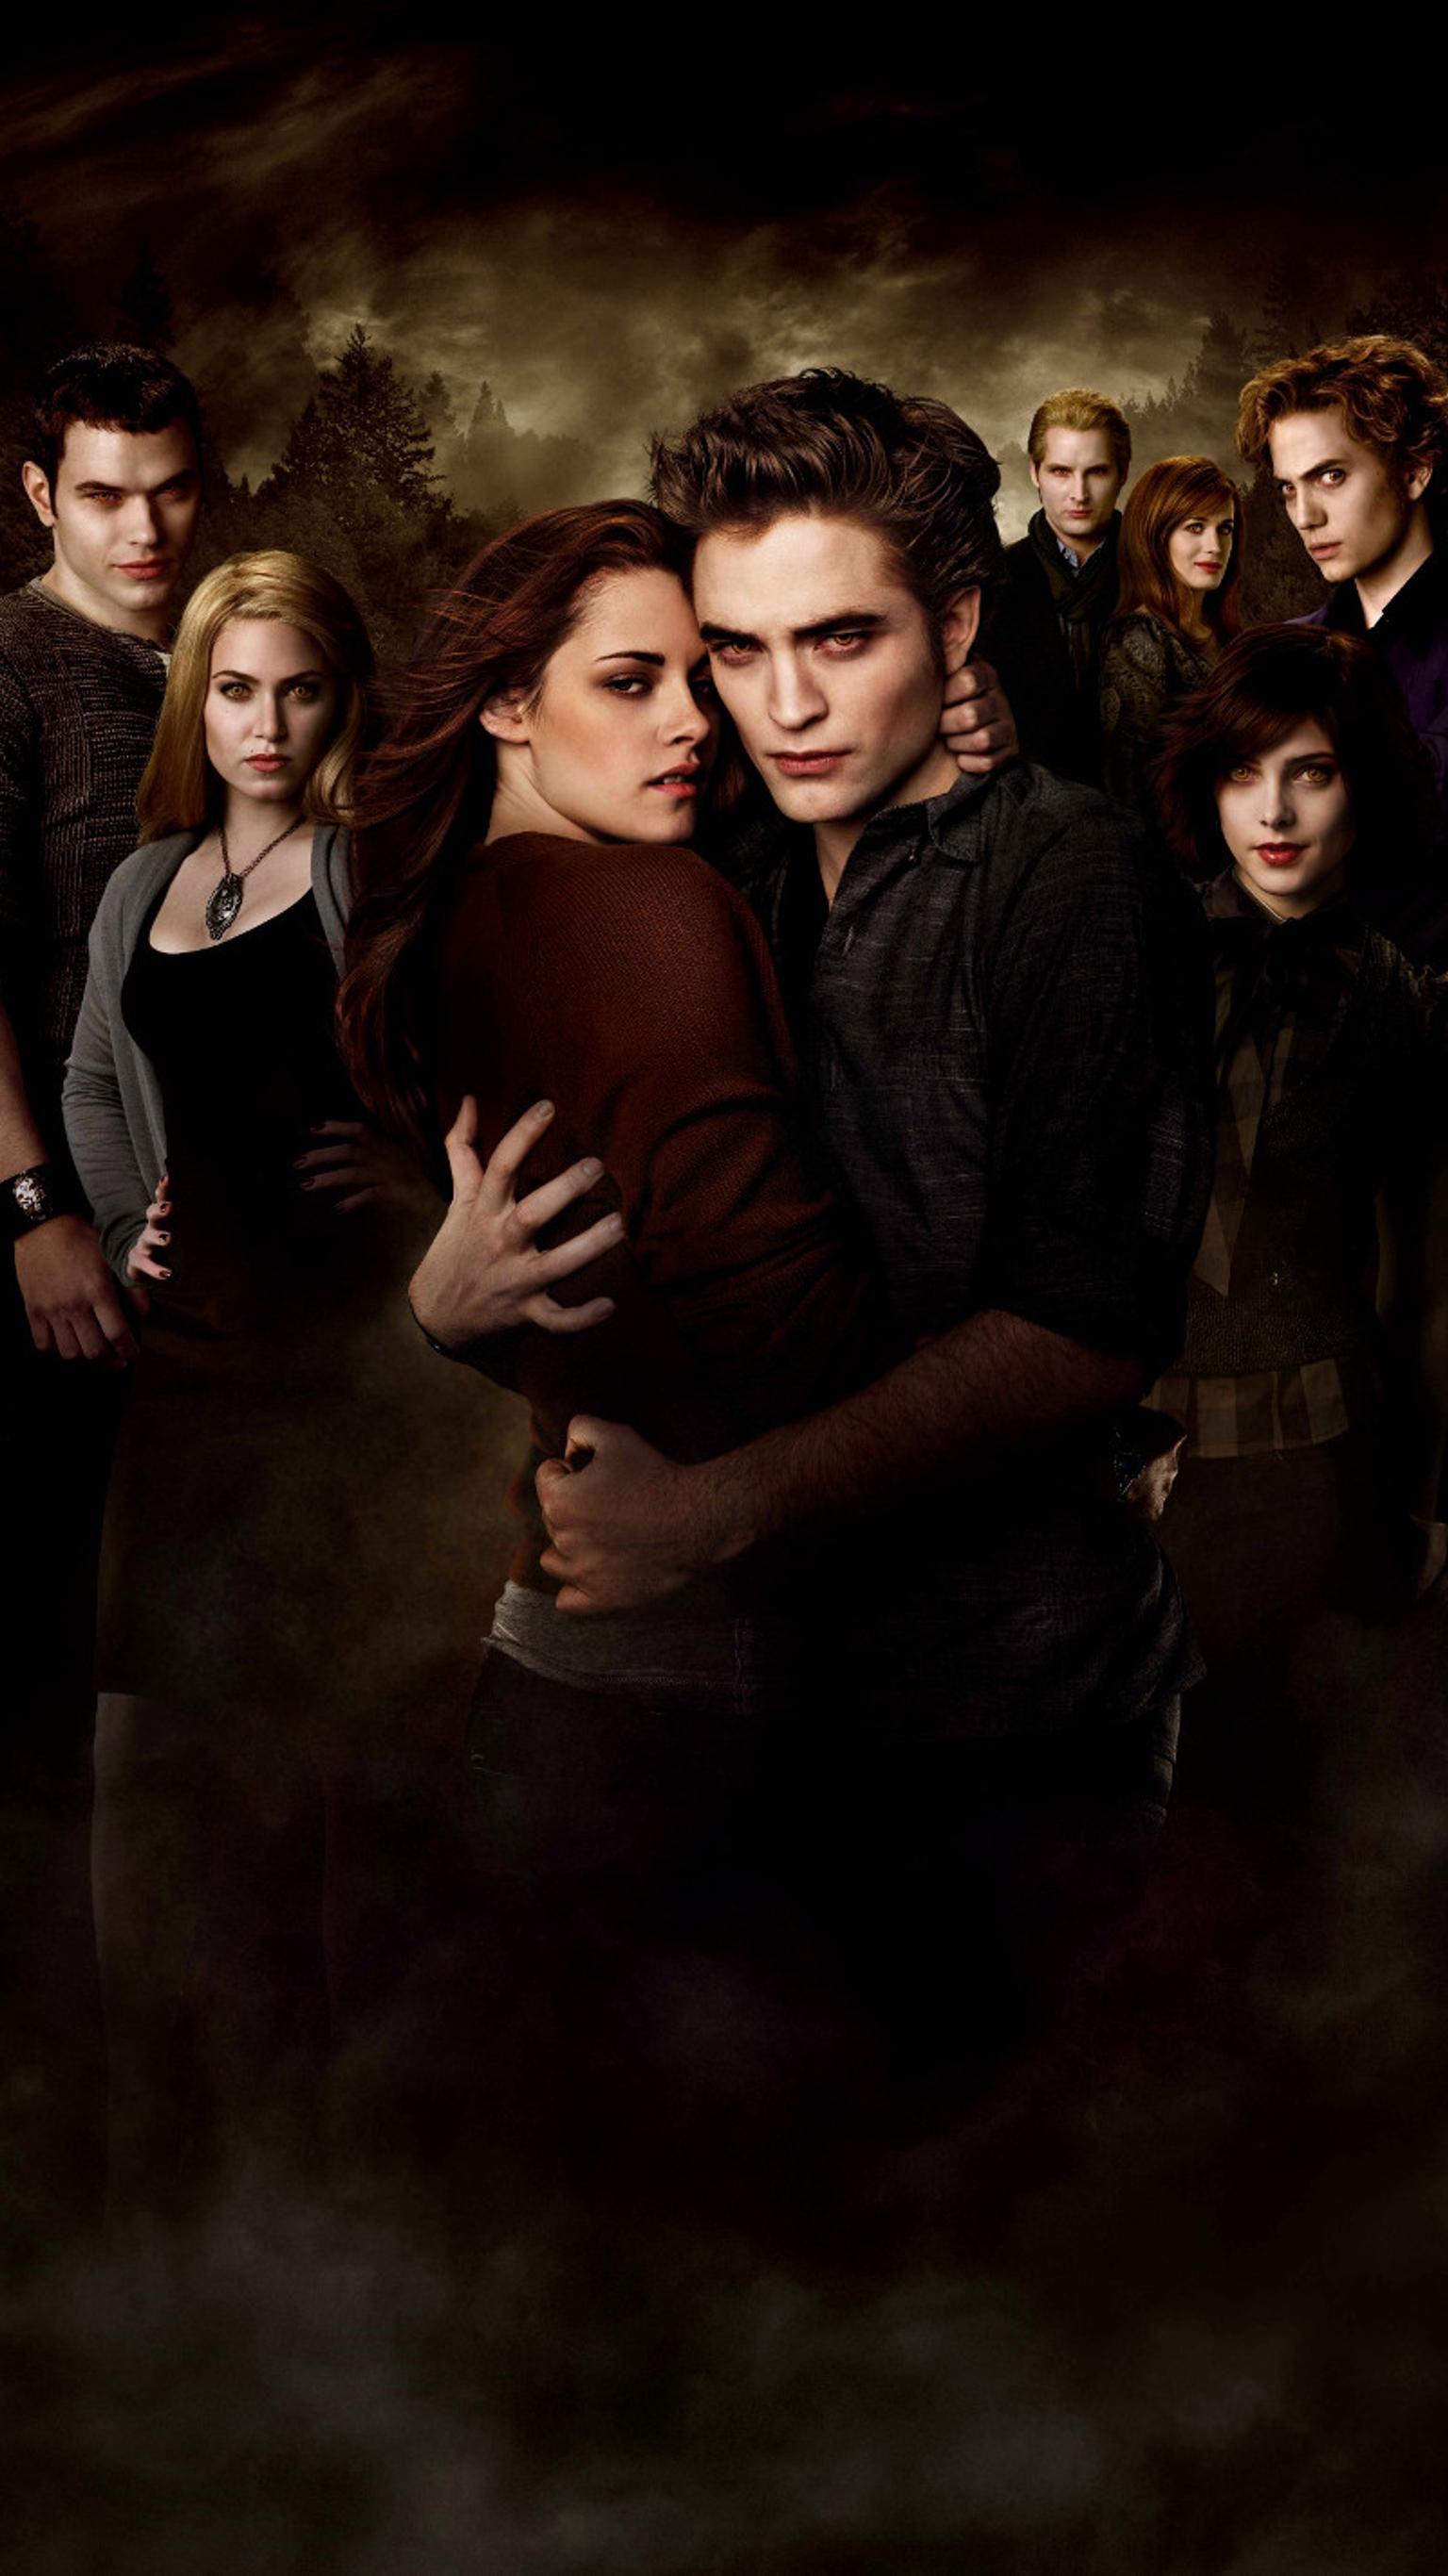 The Twilight Saga: New Moon (2009) Phone Wallpaper. Twilight saga